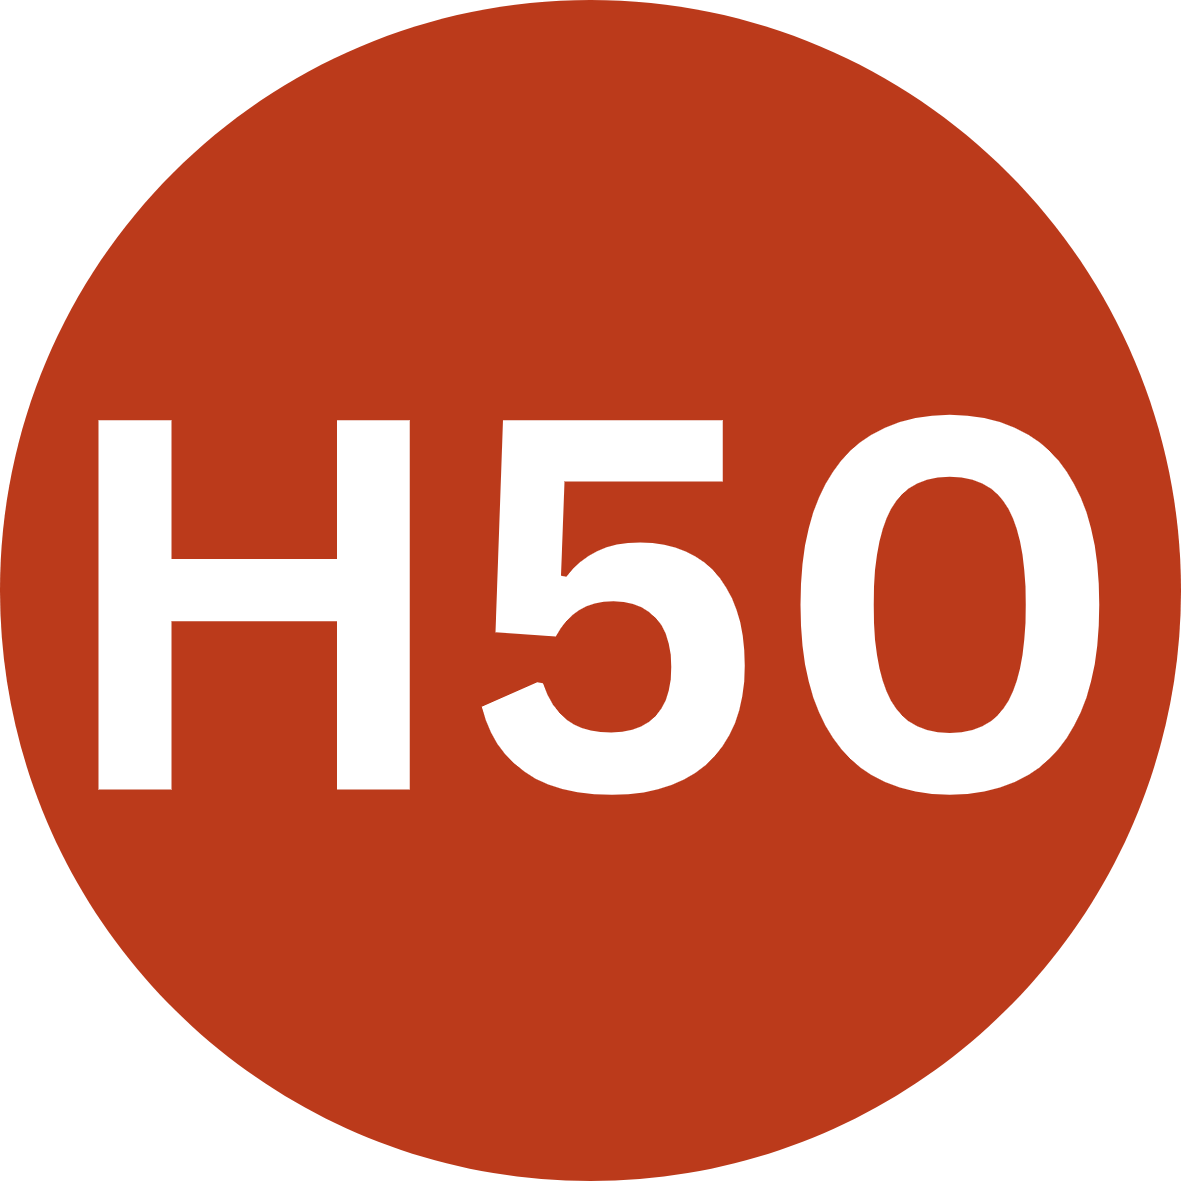 h50